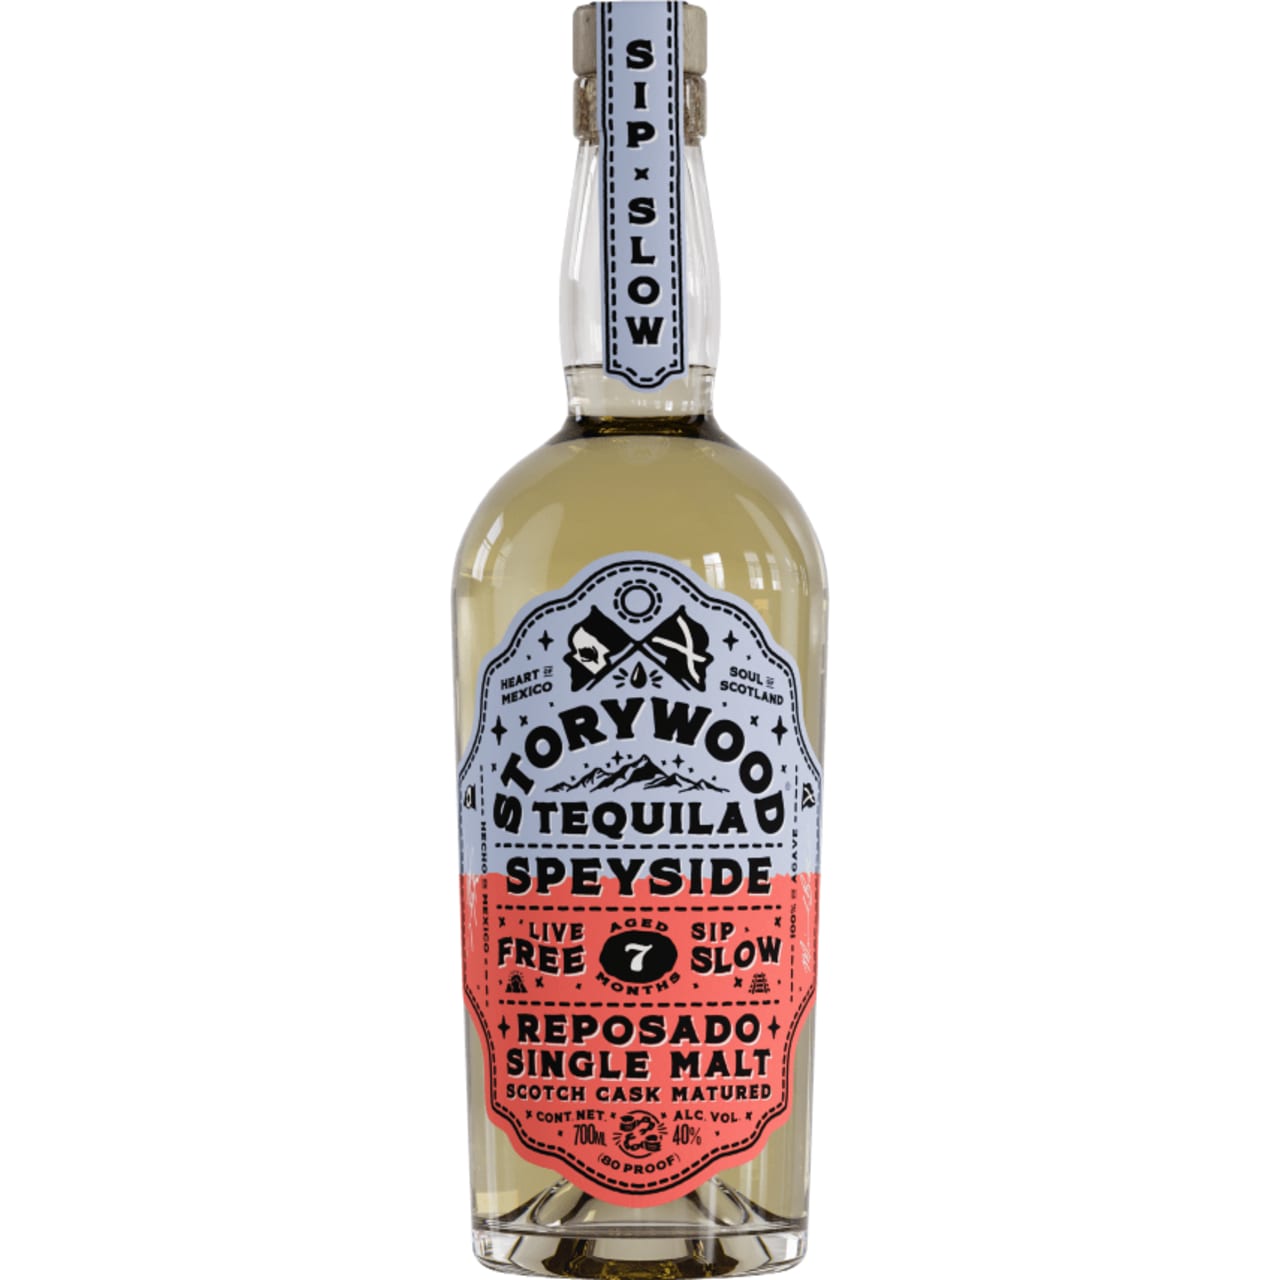 Product Image - Storywood Speyside 7 Tequila